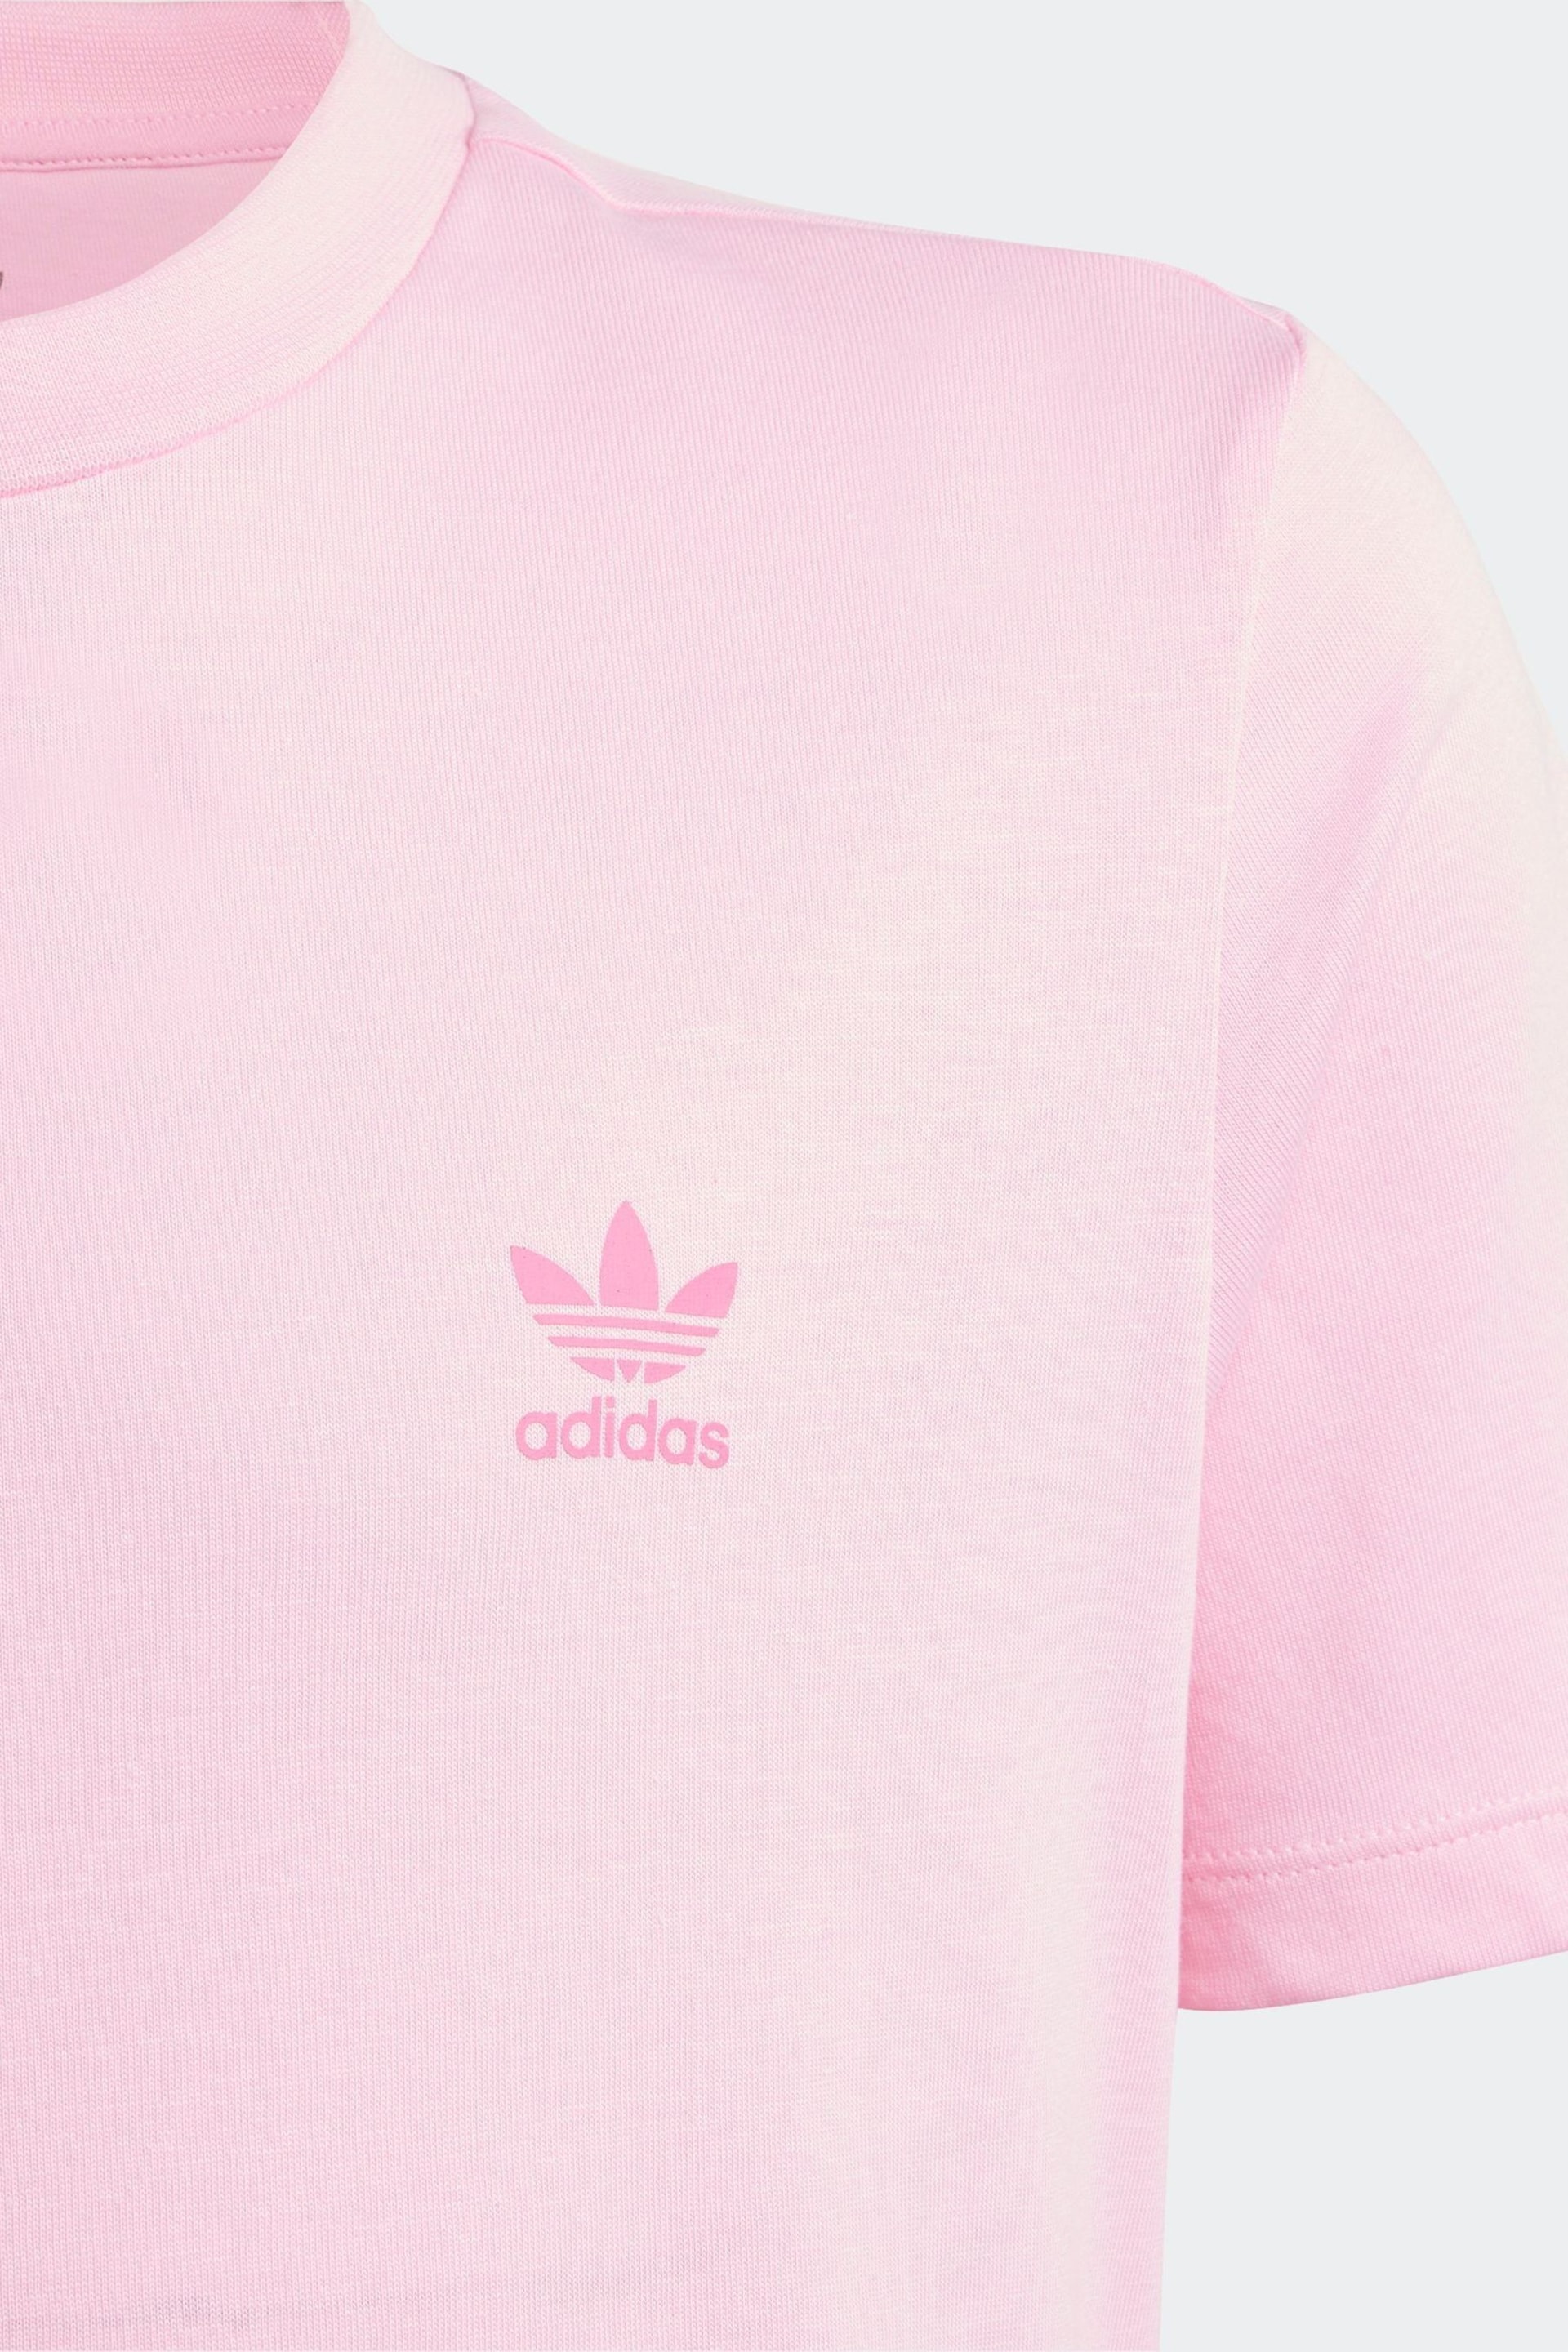 adidas Originals Light Pink Adicolor T-Shirt - Image 3 of 5